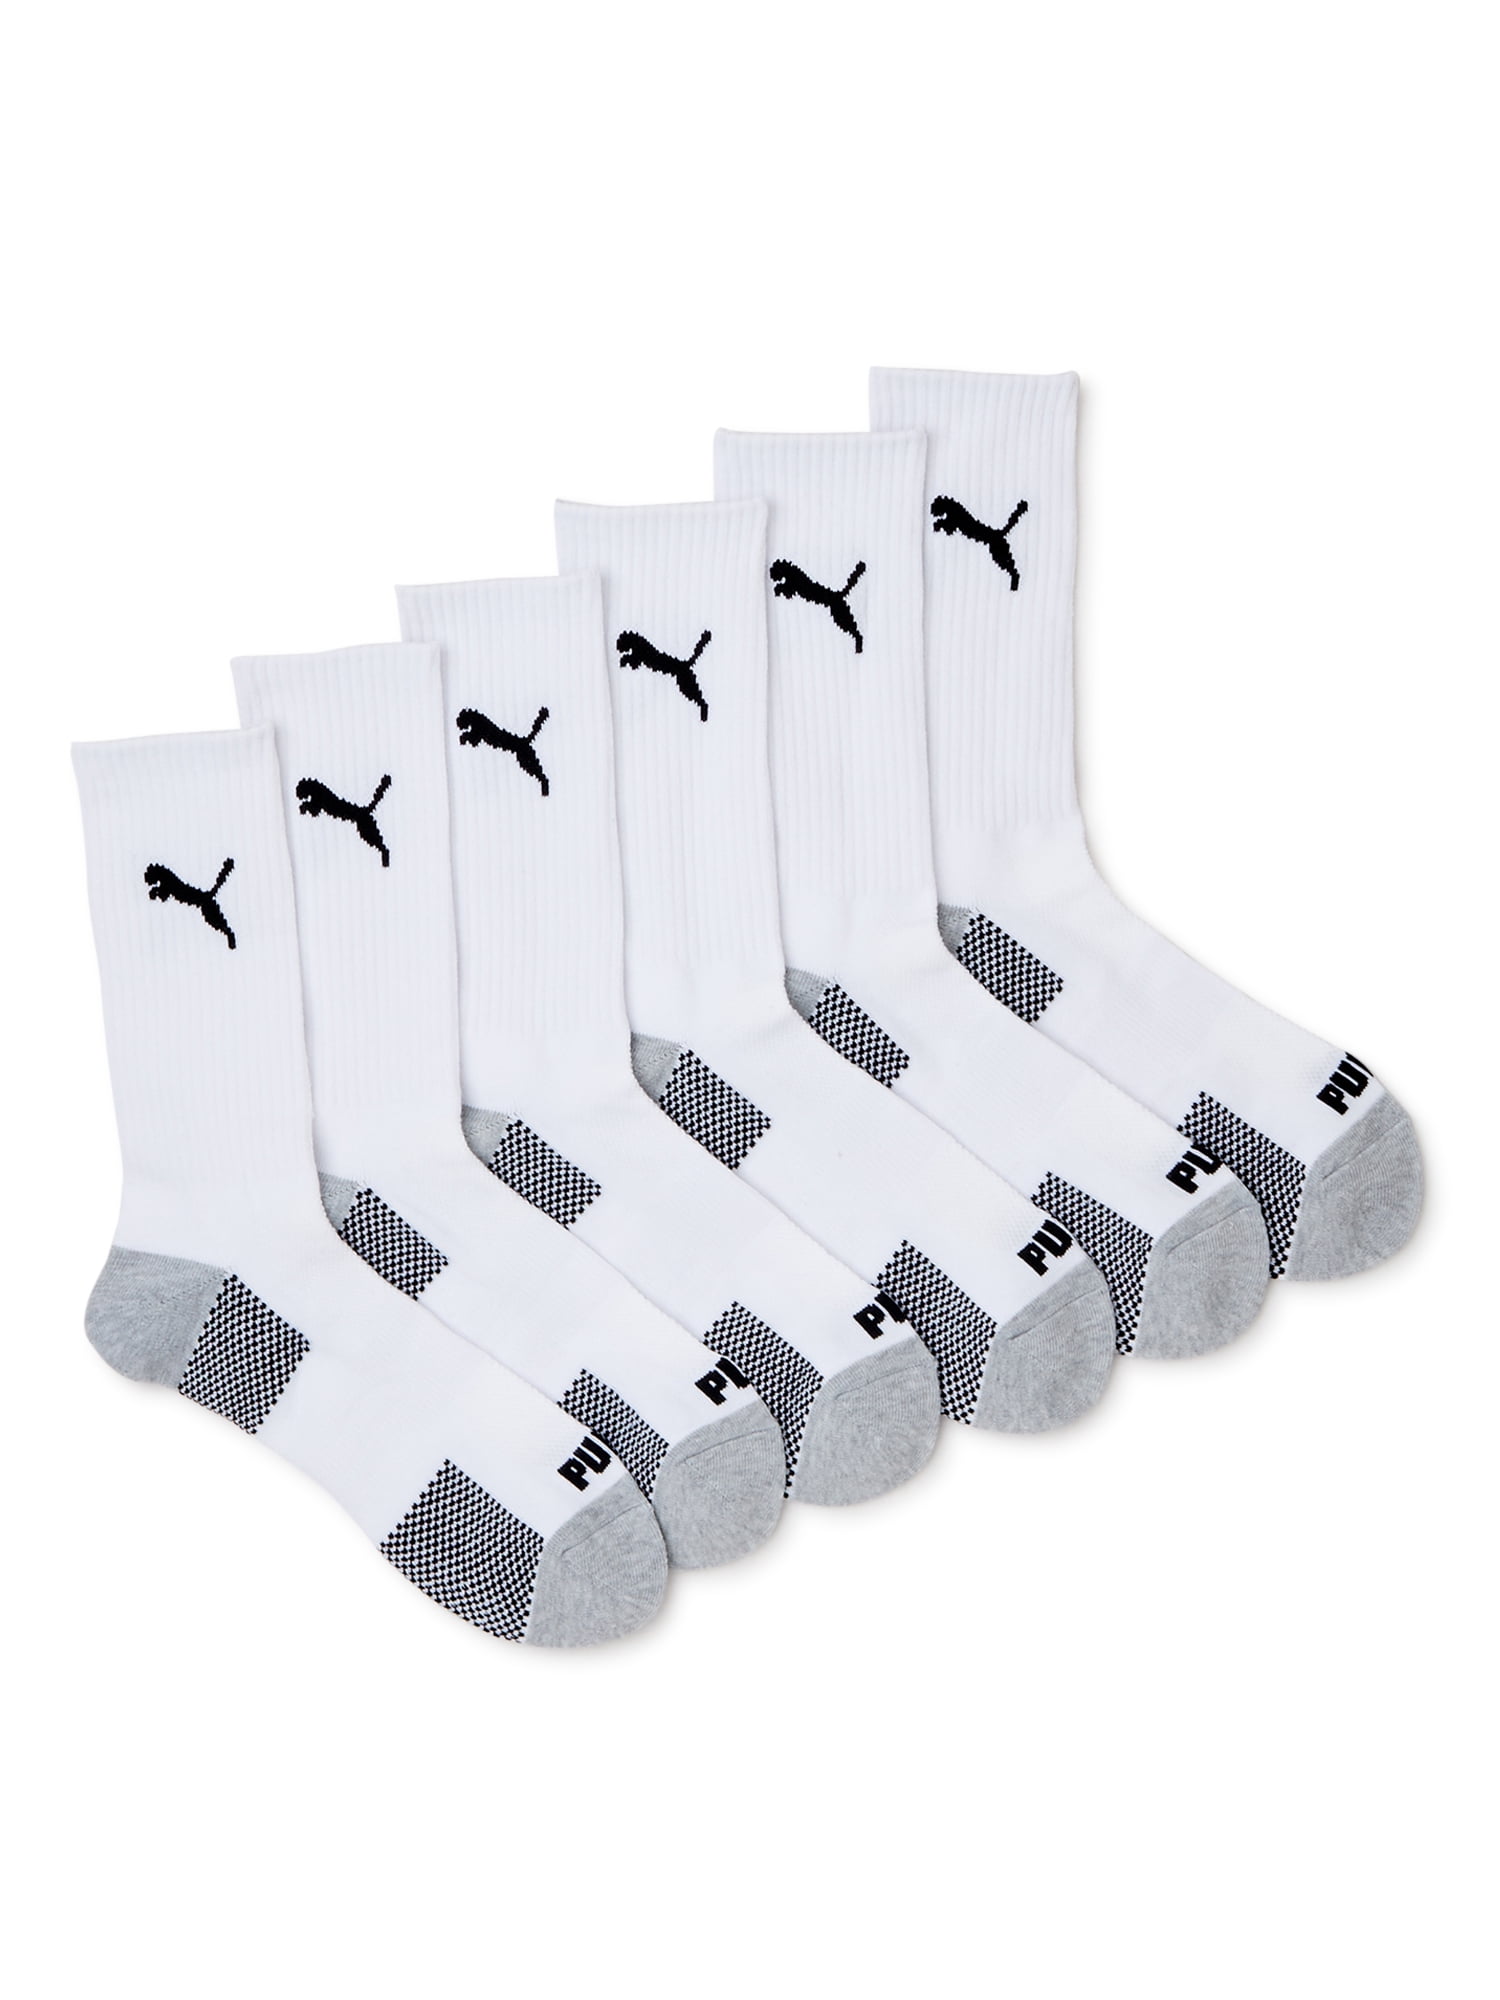 Men's Crew Socks, 6-Pack - Walmart.com